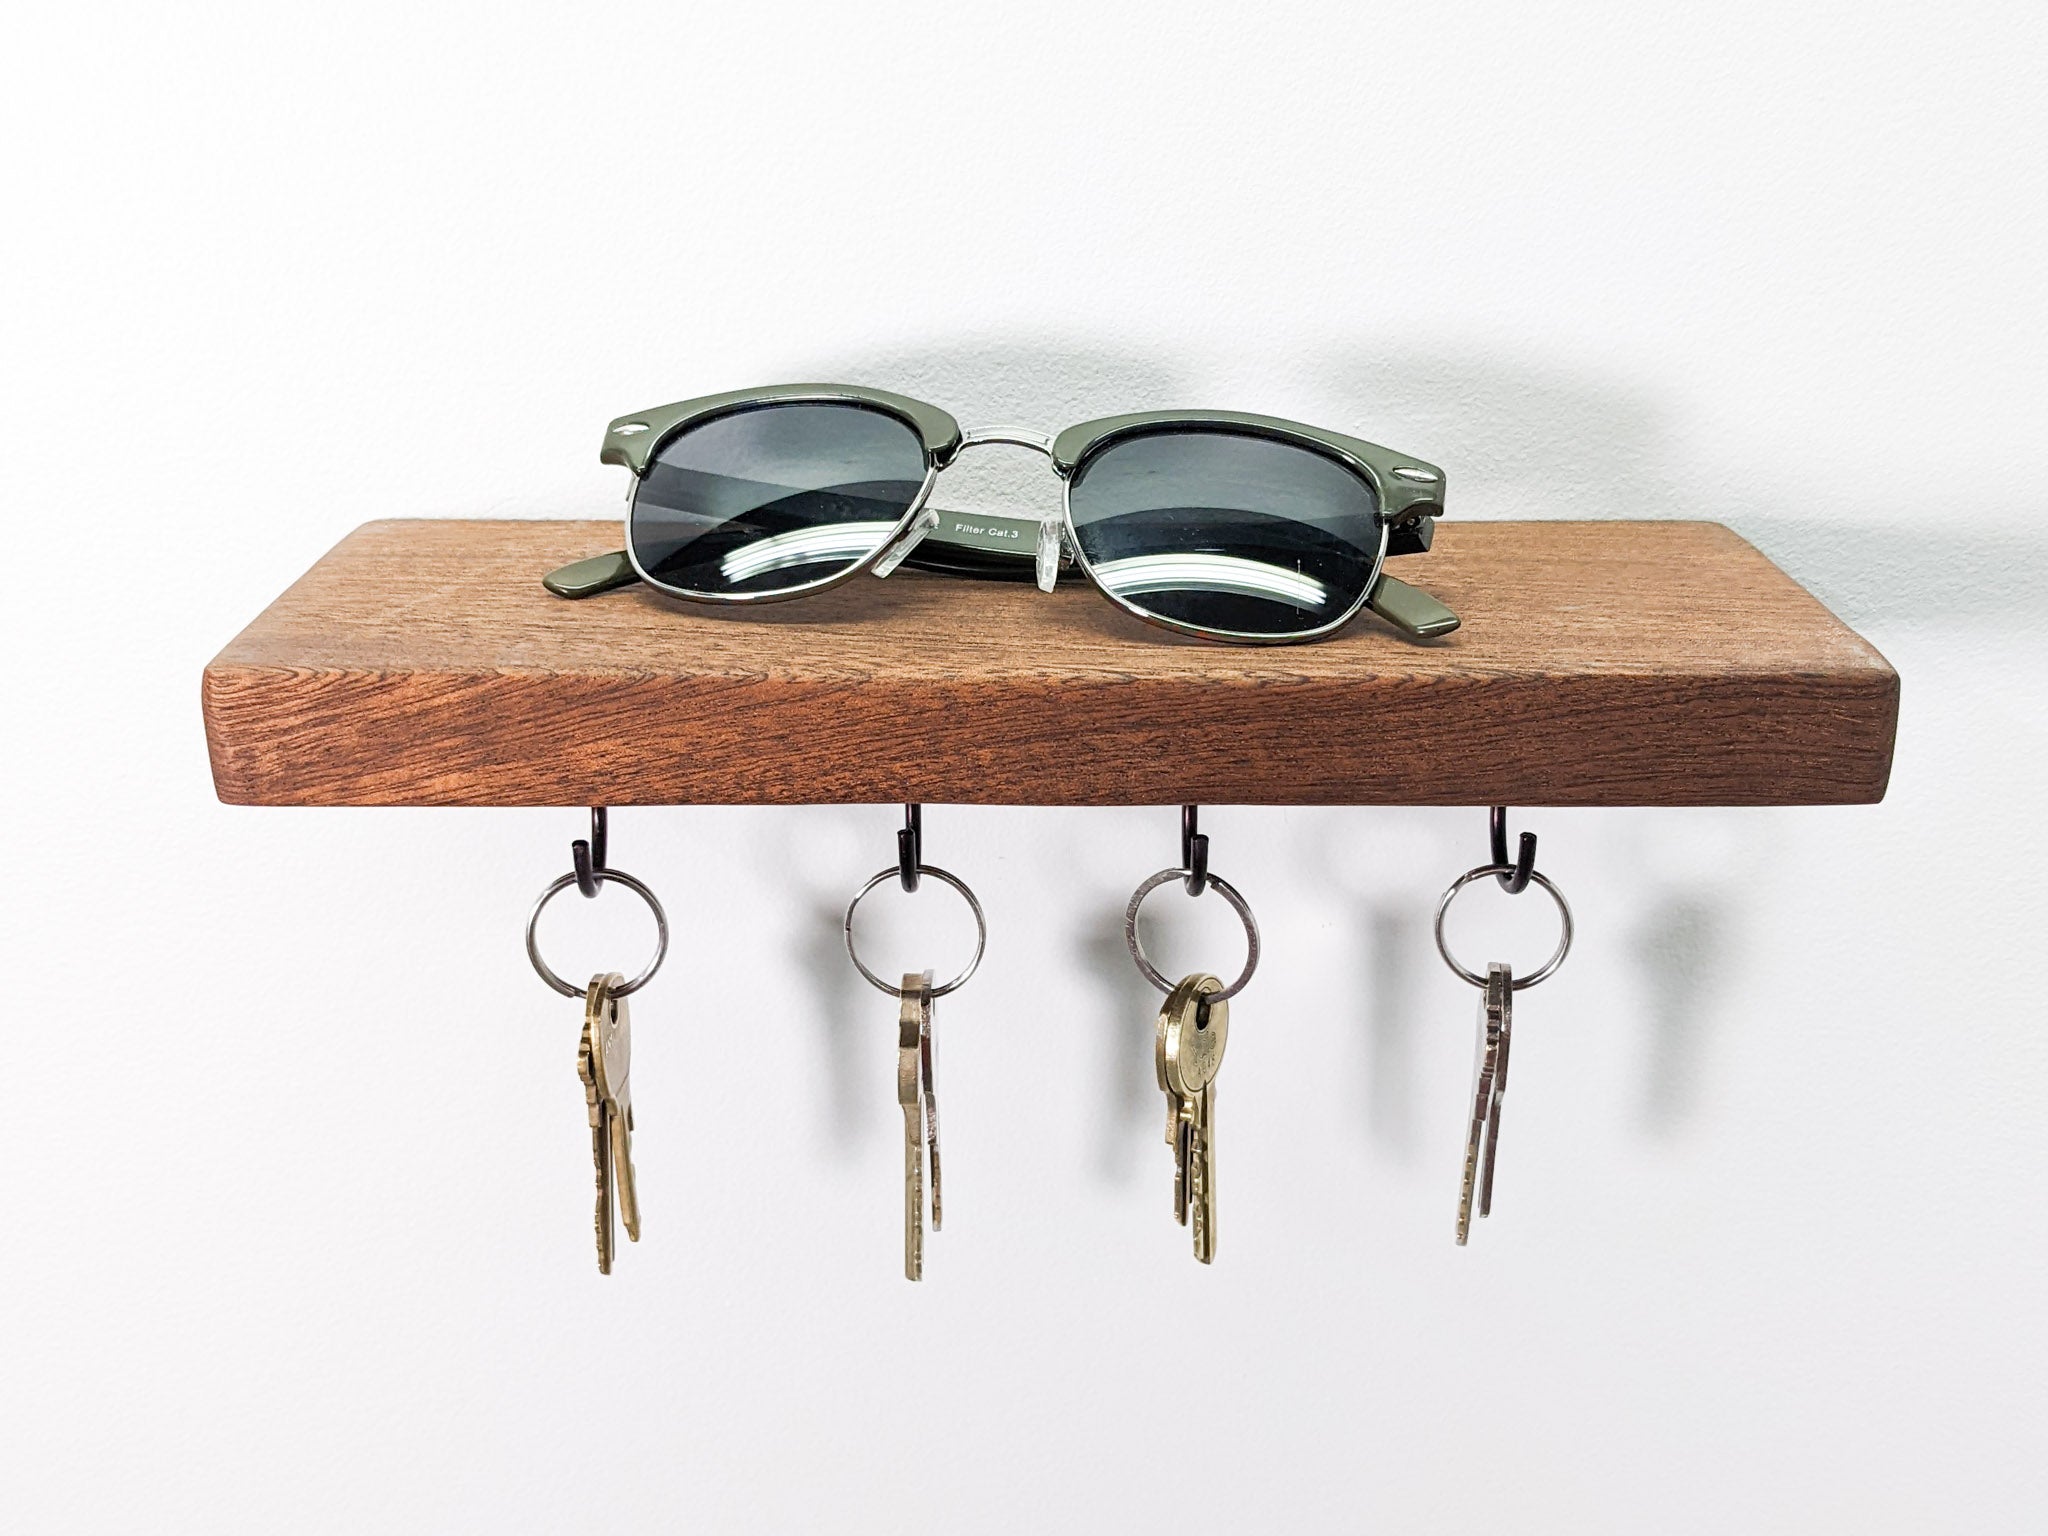 Distinctive Mahogany Shelf for Keys - NookWoodworking